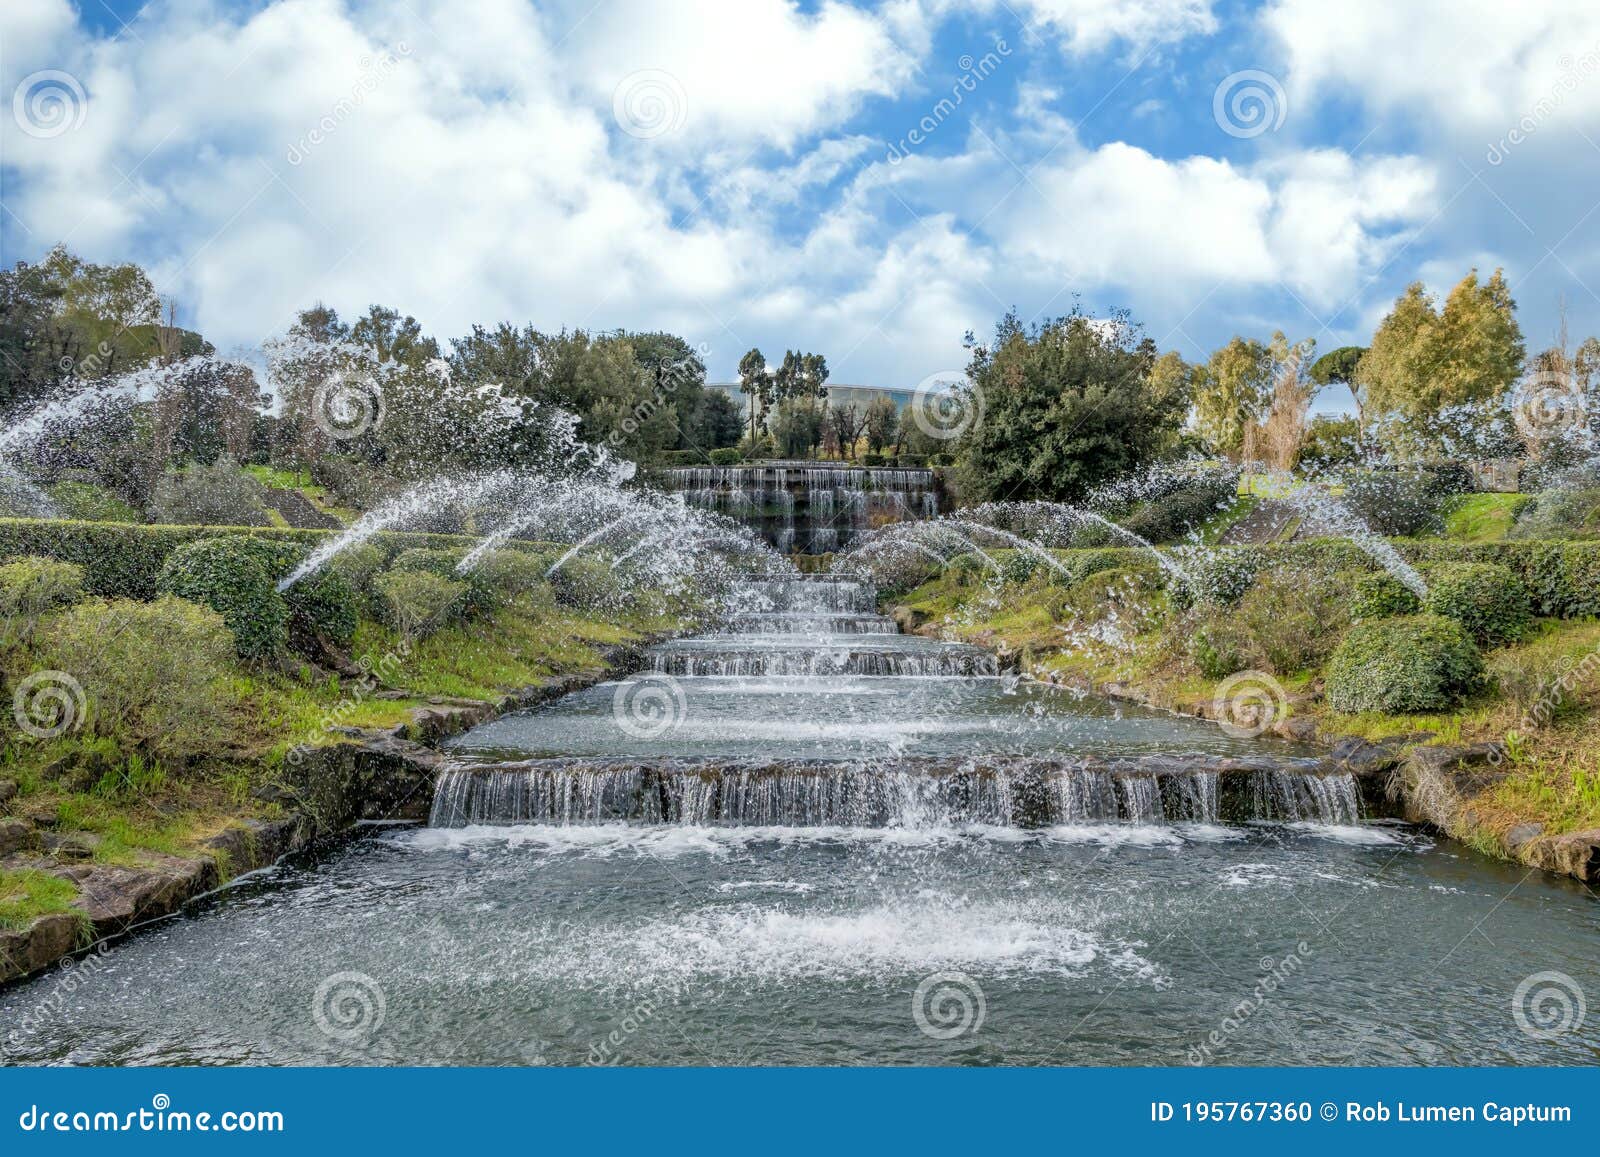 giardino delle cascate waterfall garden in eur district rome